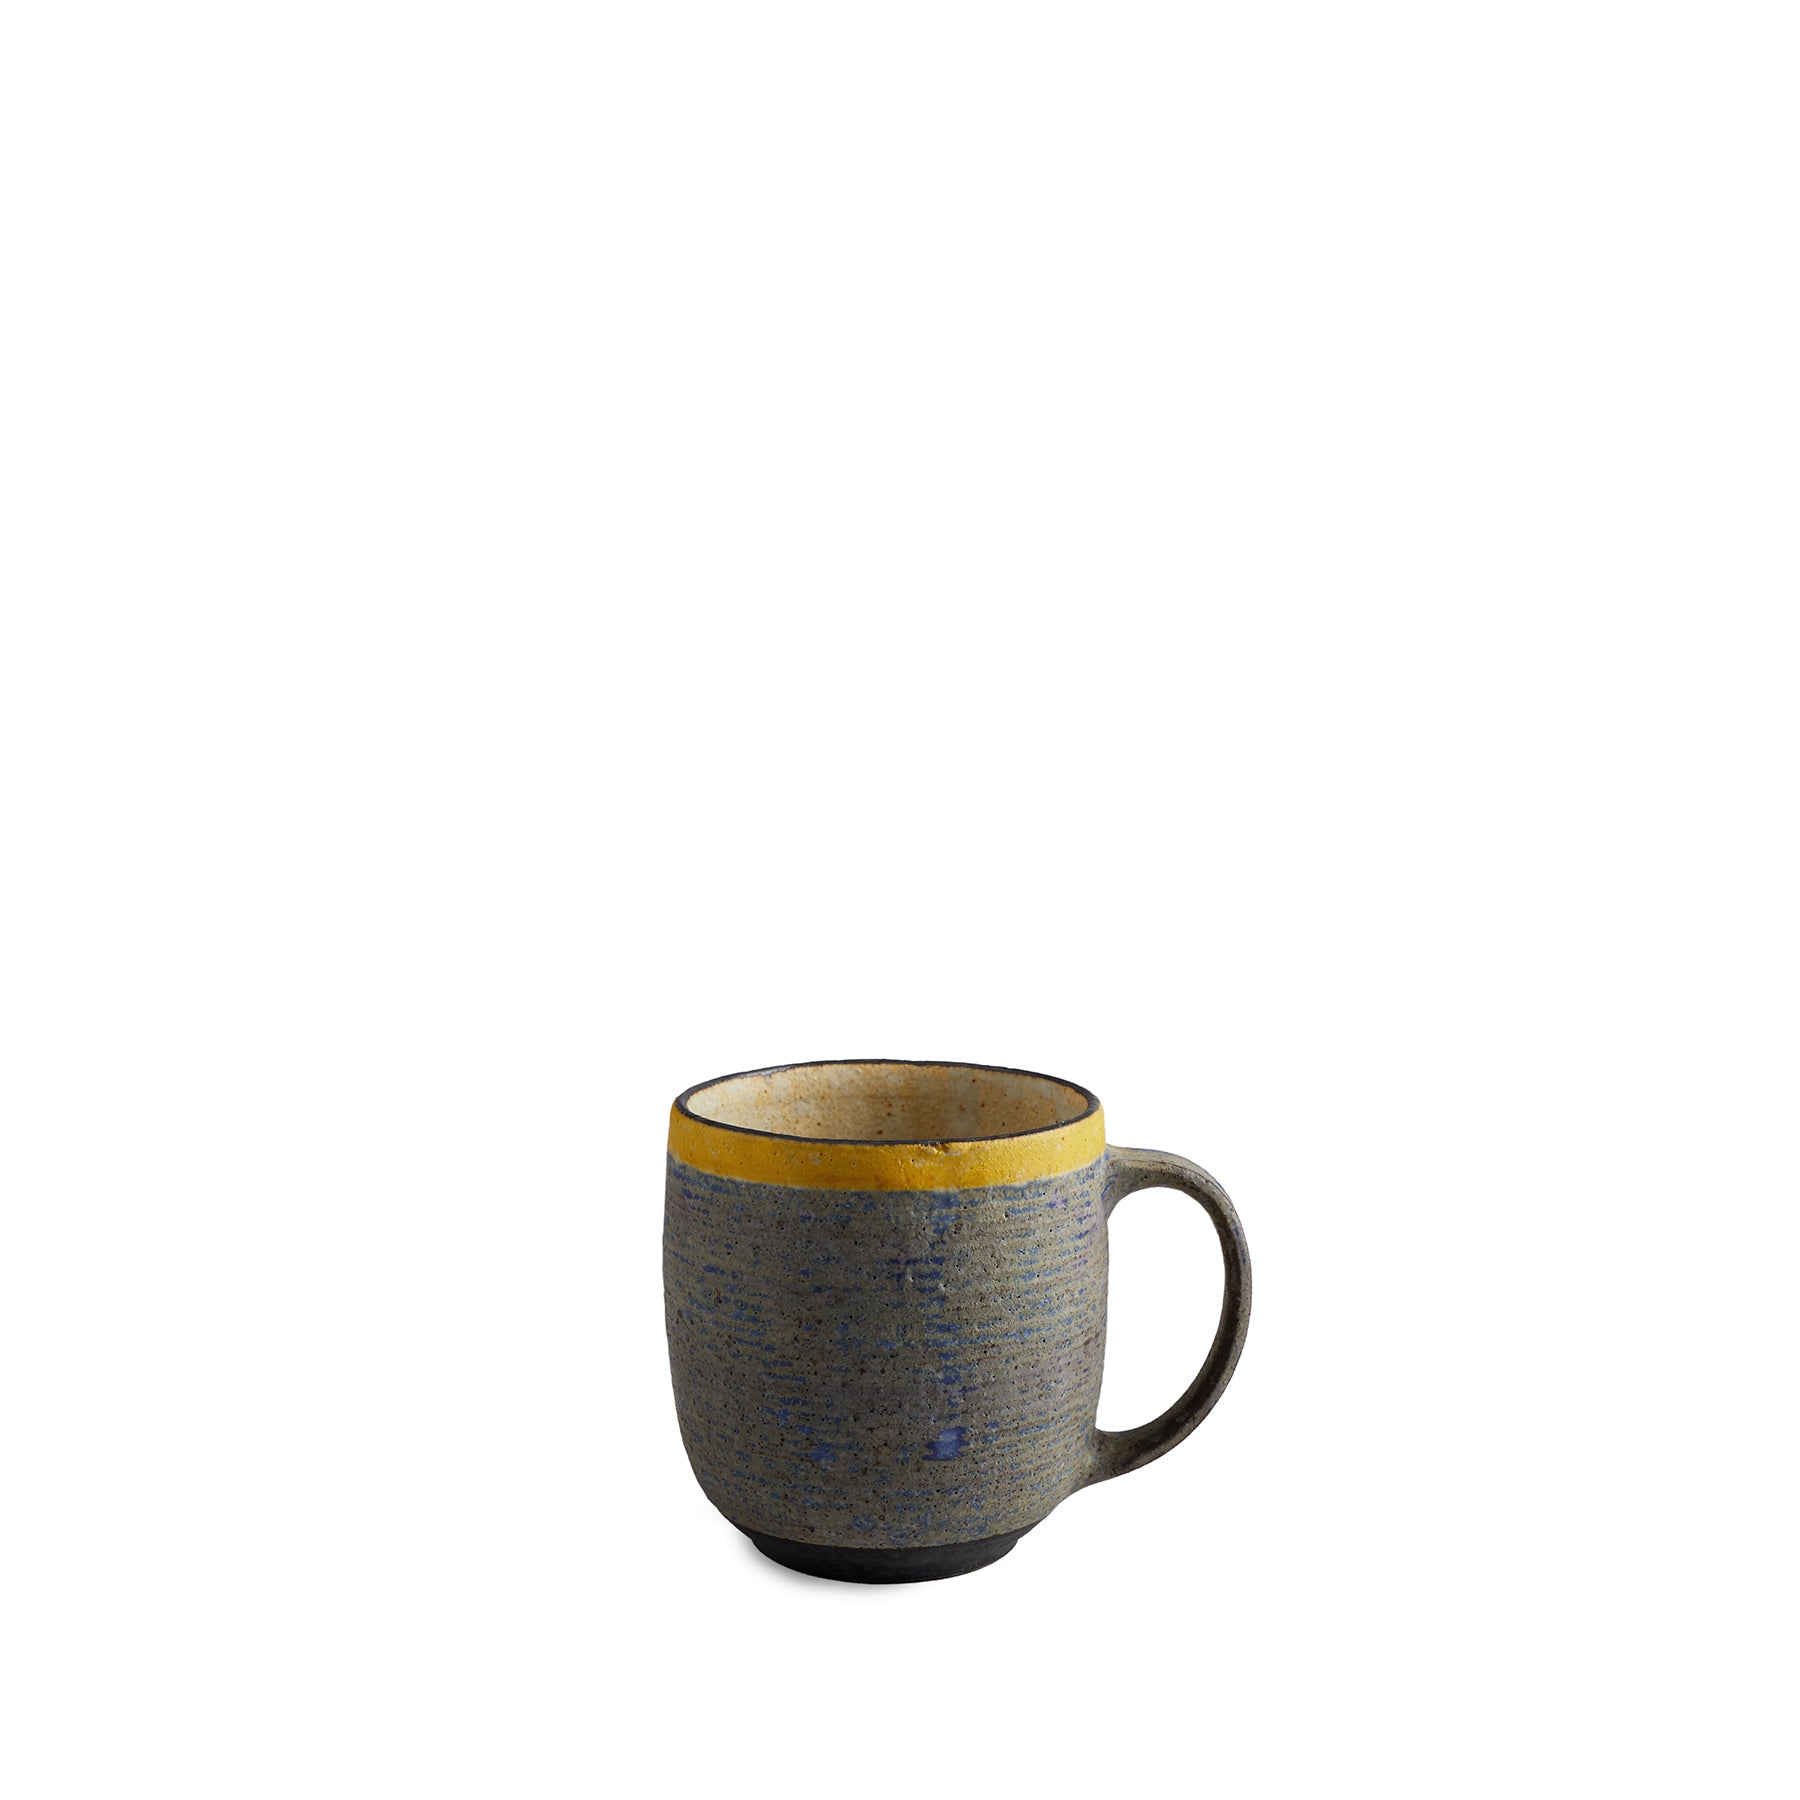 #22 Large Mug in Indigo with Yellow Ring Zoom Image 1